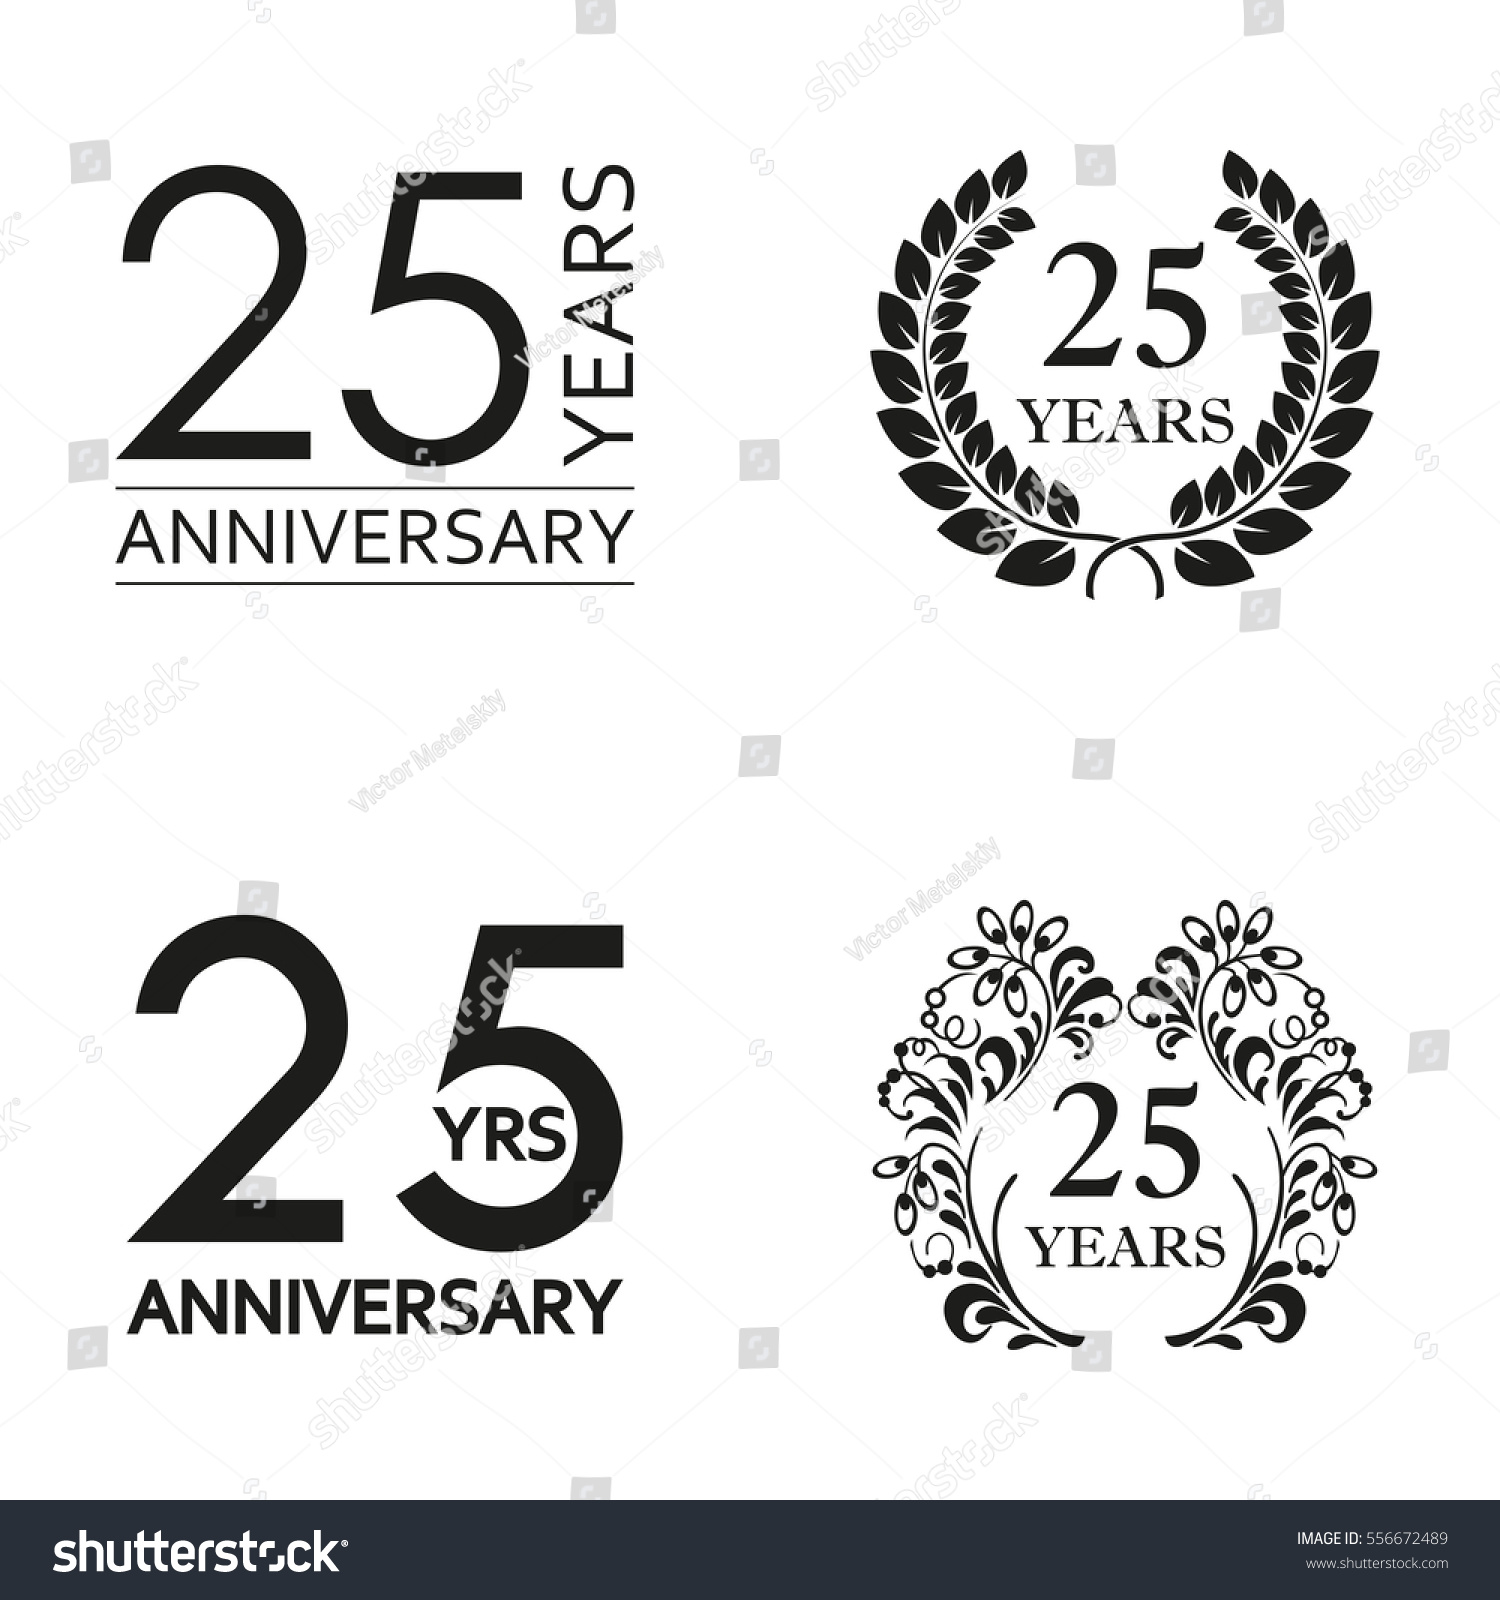 Download 25 Years Anniversary Set Anniversary Icon Stock Vector 556672489 - Shutterstock